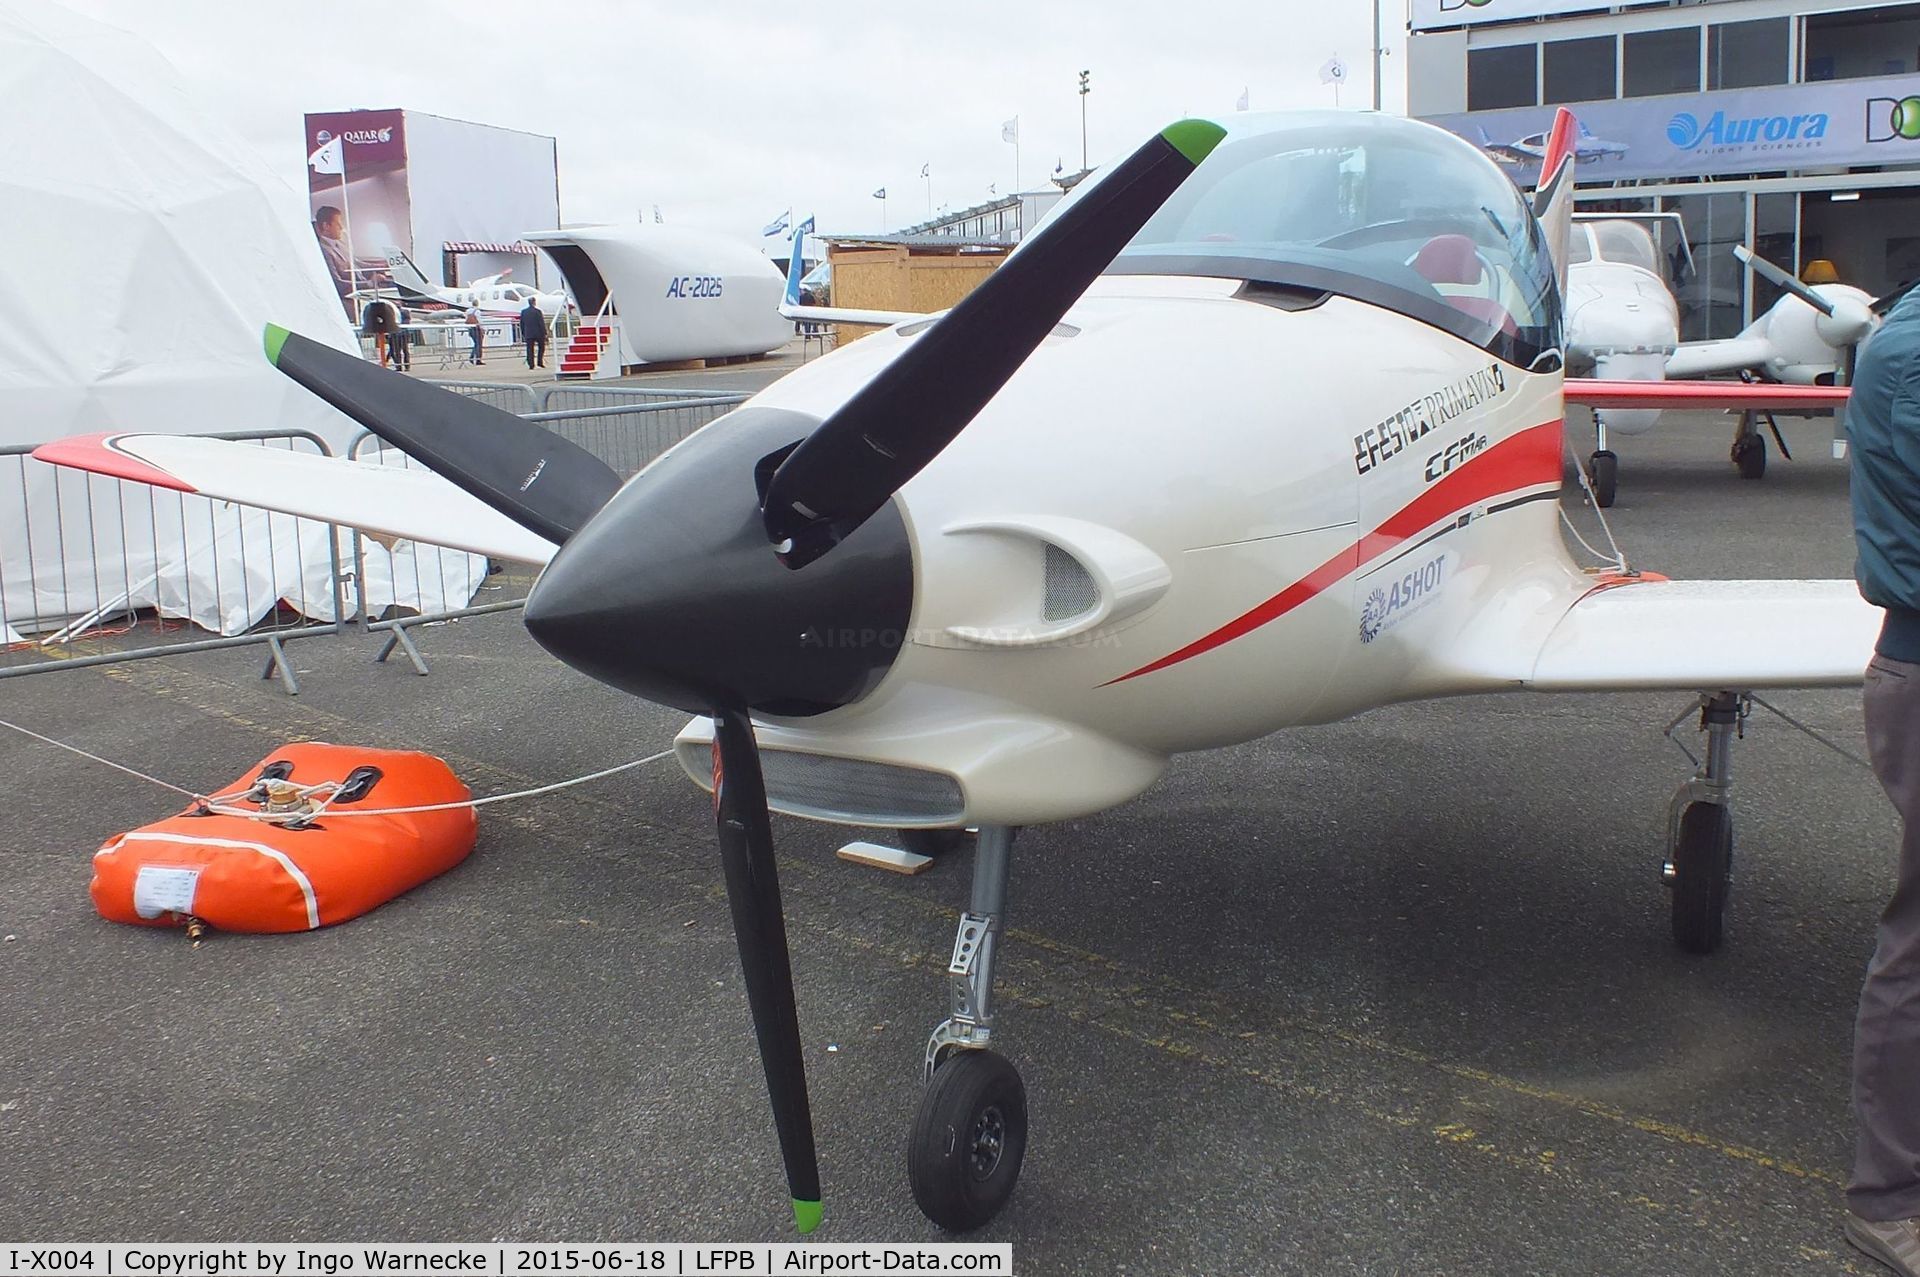 I-X004, , CFM Air Dardo hybrid with Rotax and electric motor at the Aerosalon 2015, Paris